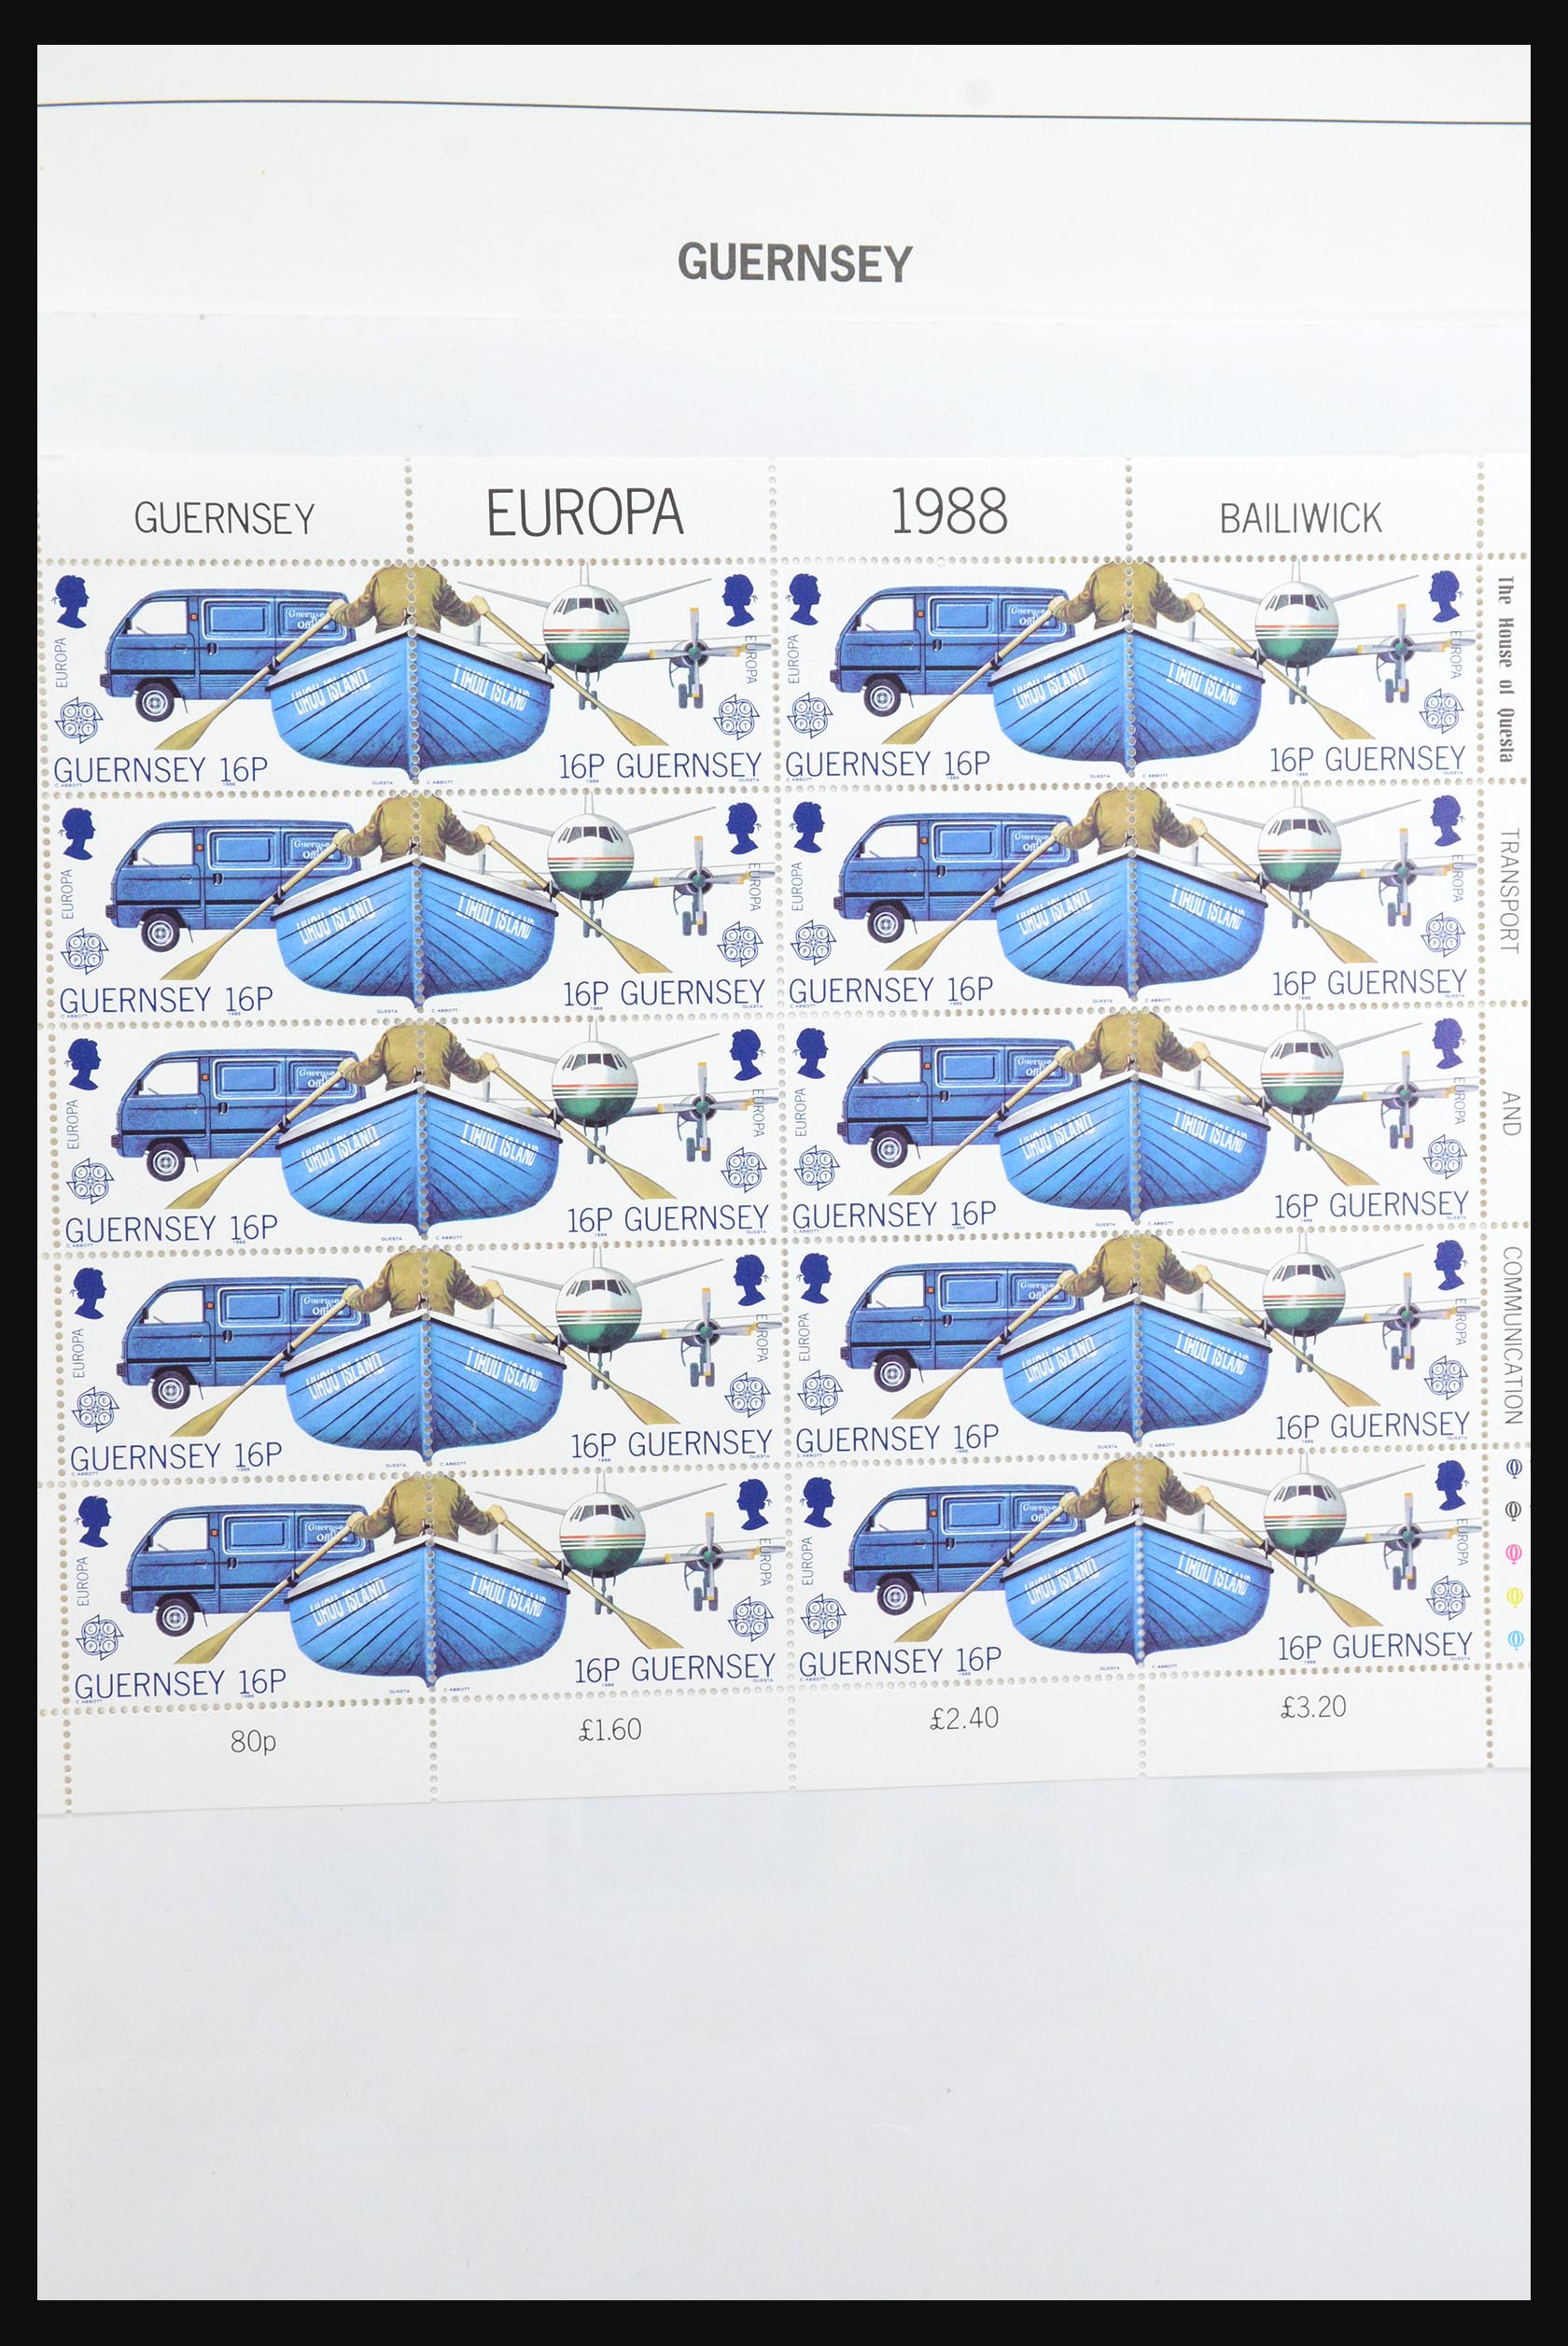 31643 042 - 31643 Guernsey 1969-2005.